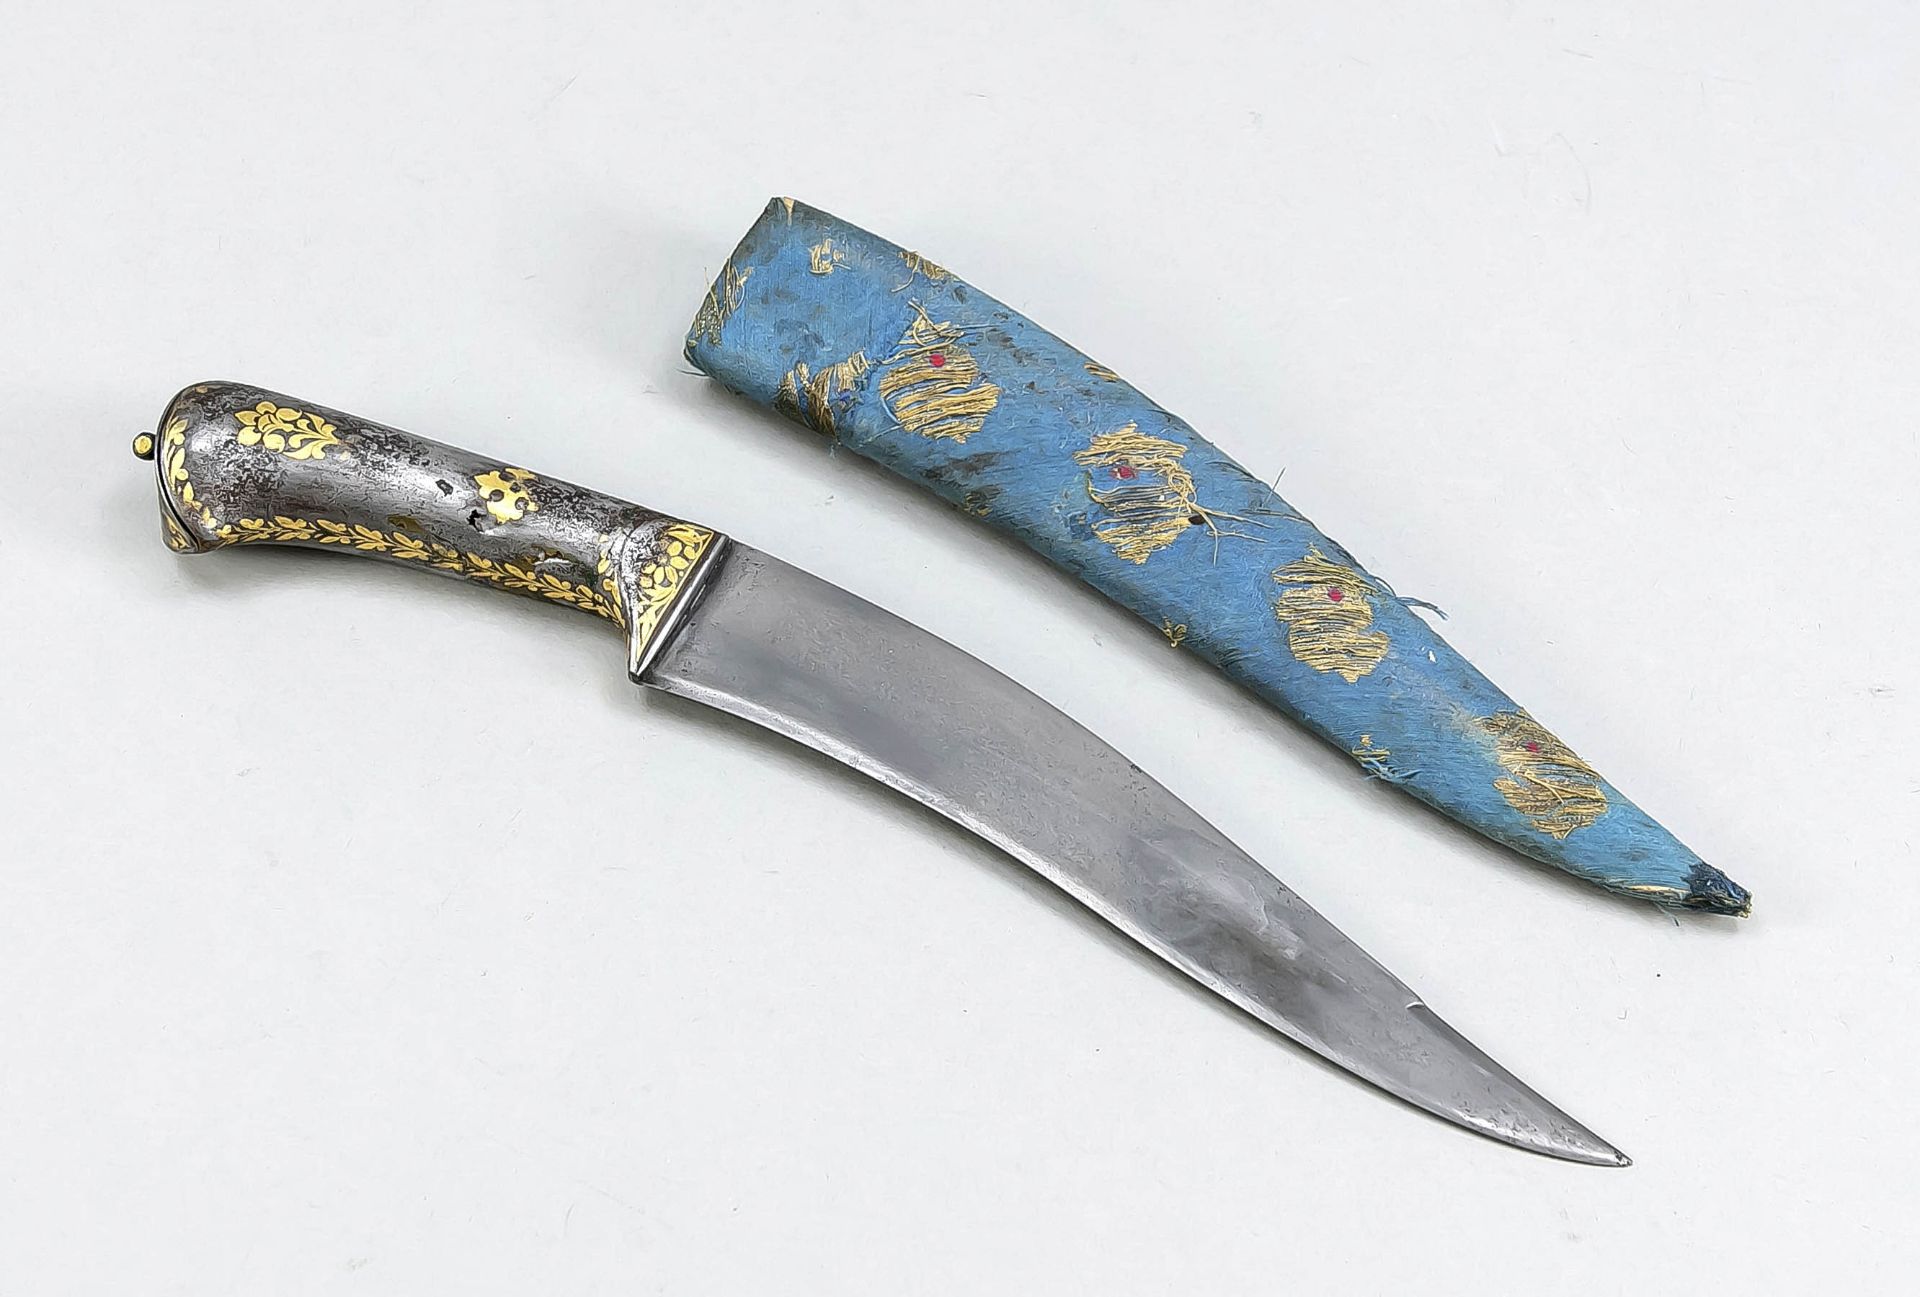 Pesh-Kapz, India/Persia, 18th/19th century. Single-edged, curved blade of wootzdamascus. Hollow iron